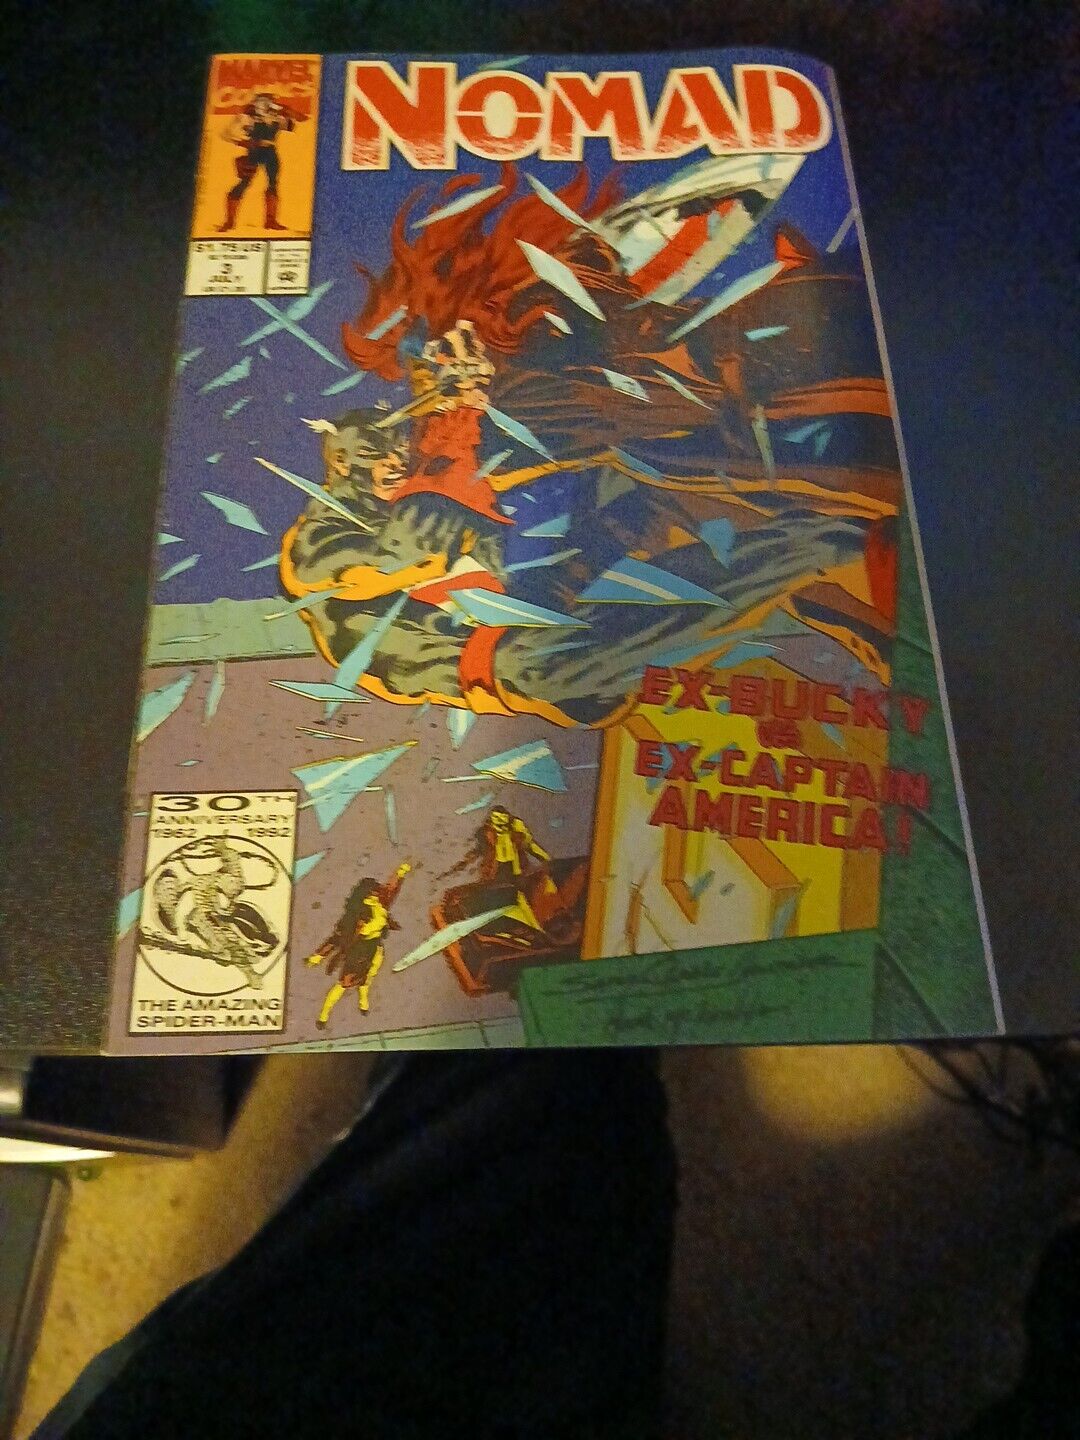 Nomad #3 (Marvel Comics July 1992)